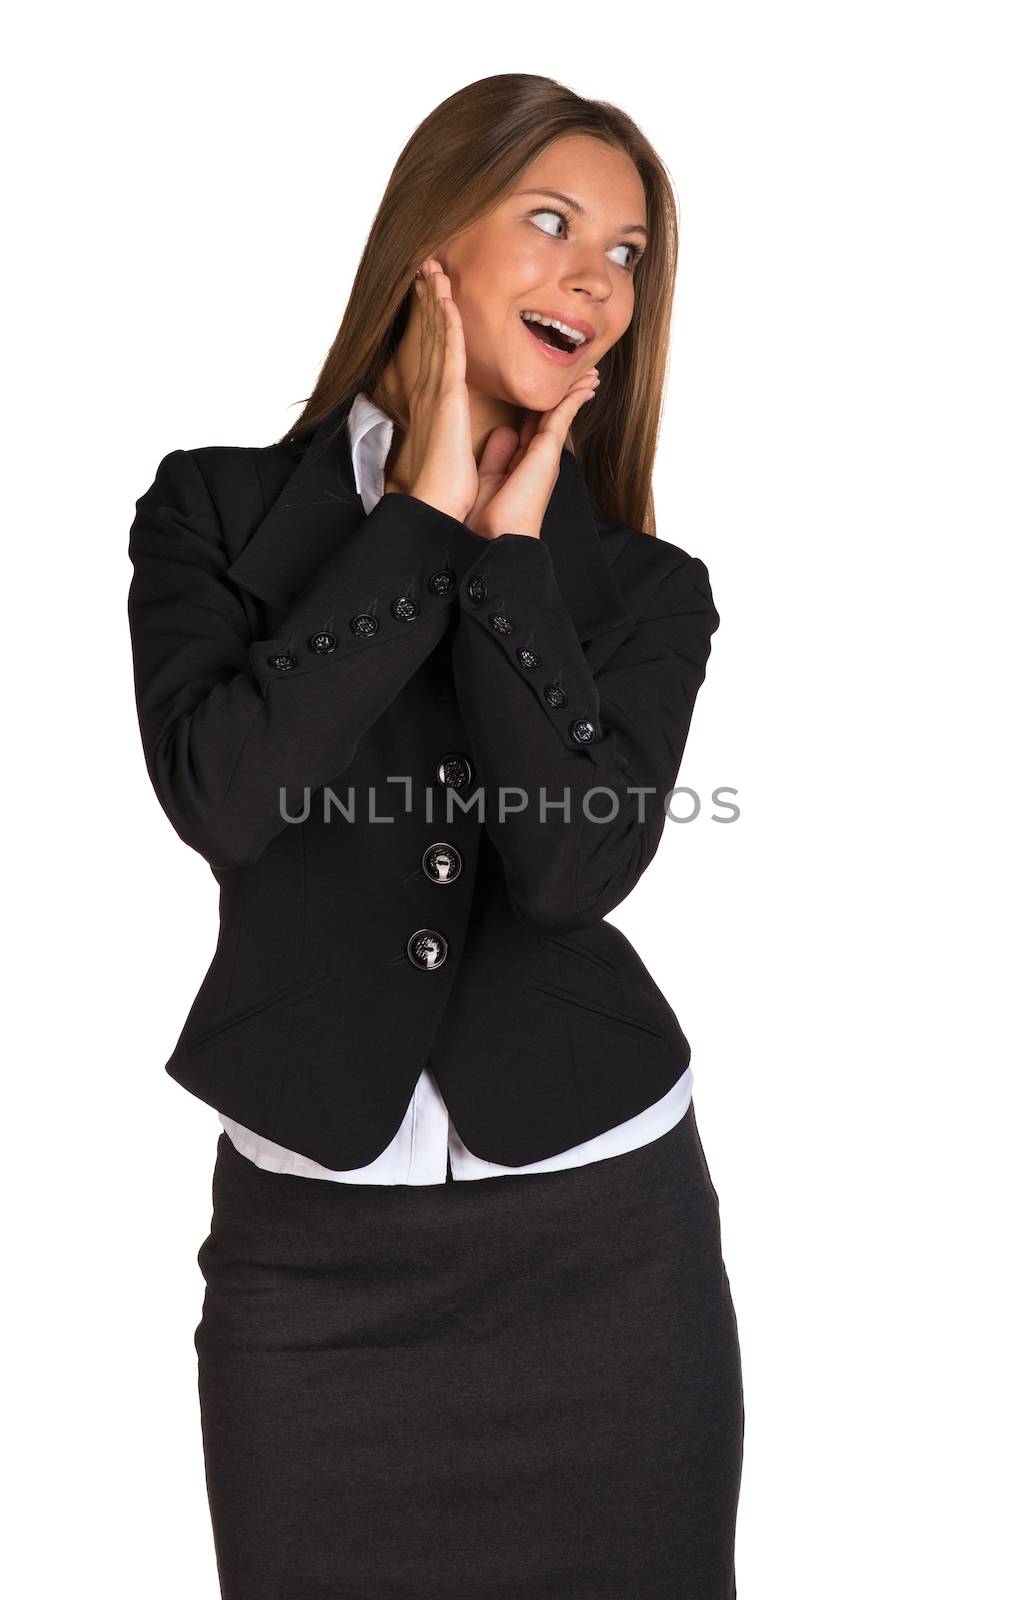 Joyful businesswoman by cherezoff